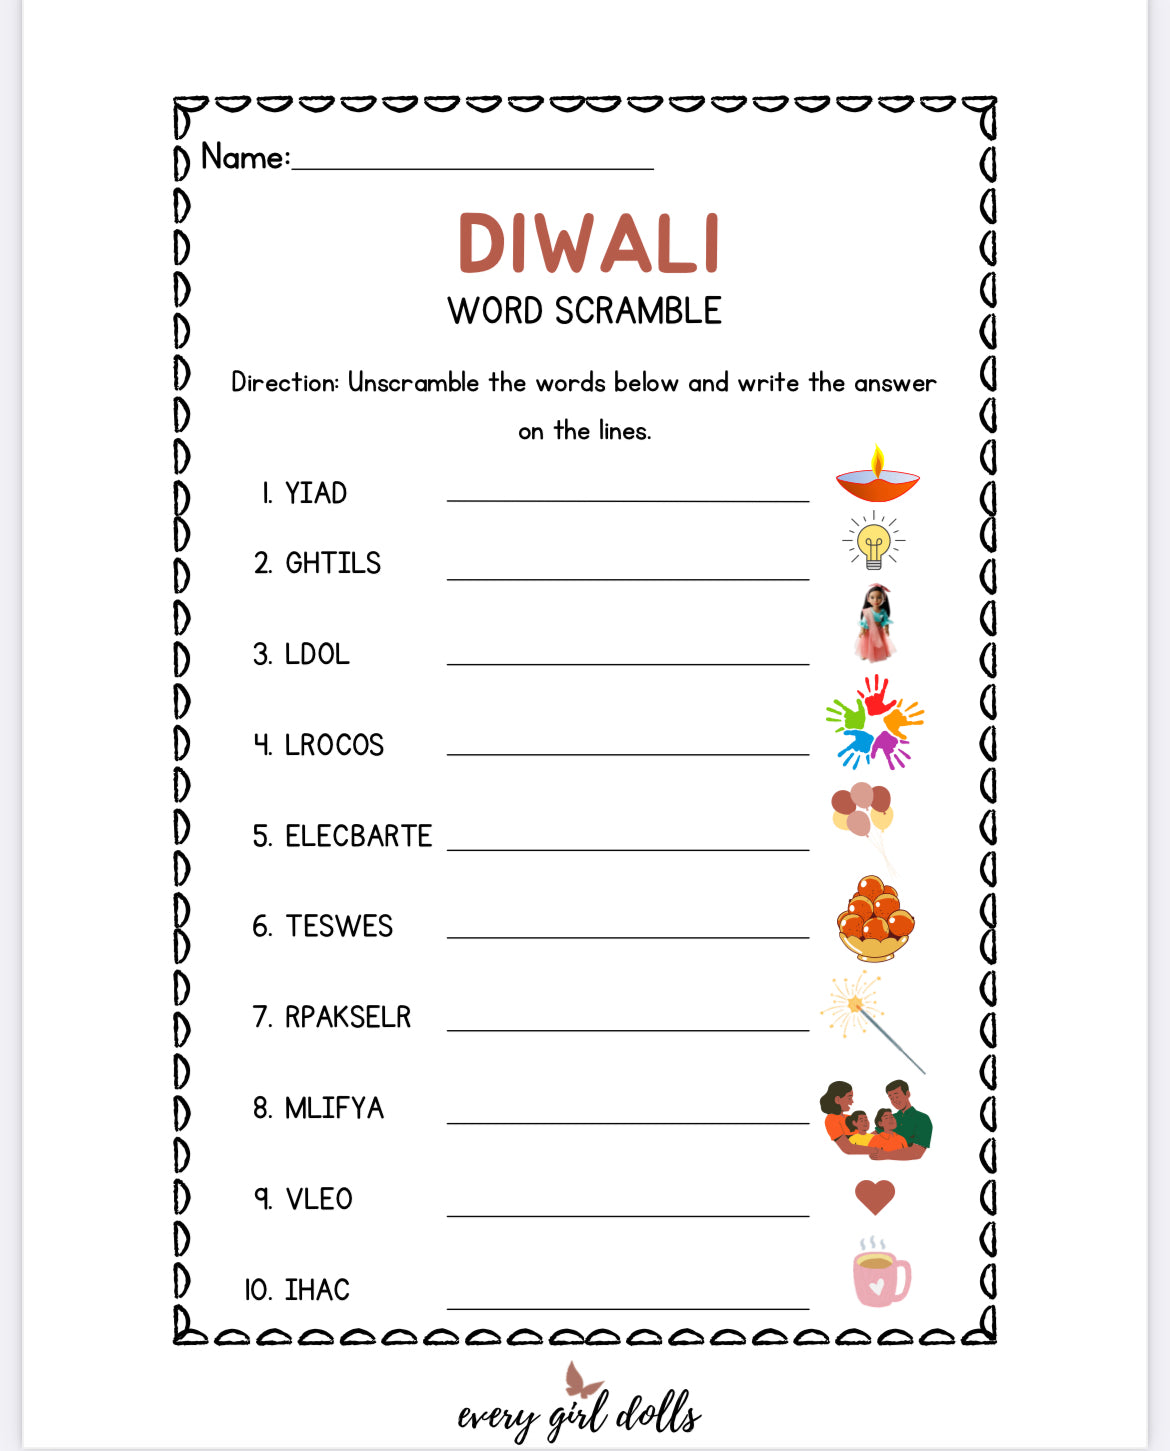 Diwali Word Scramble